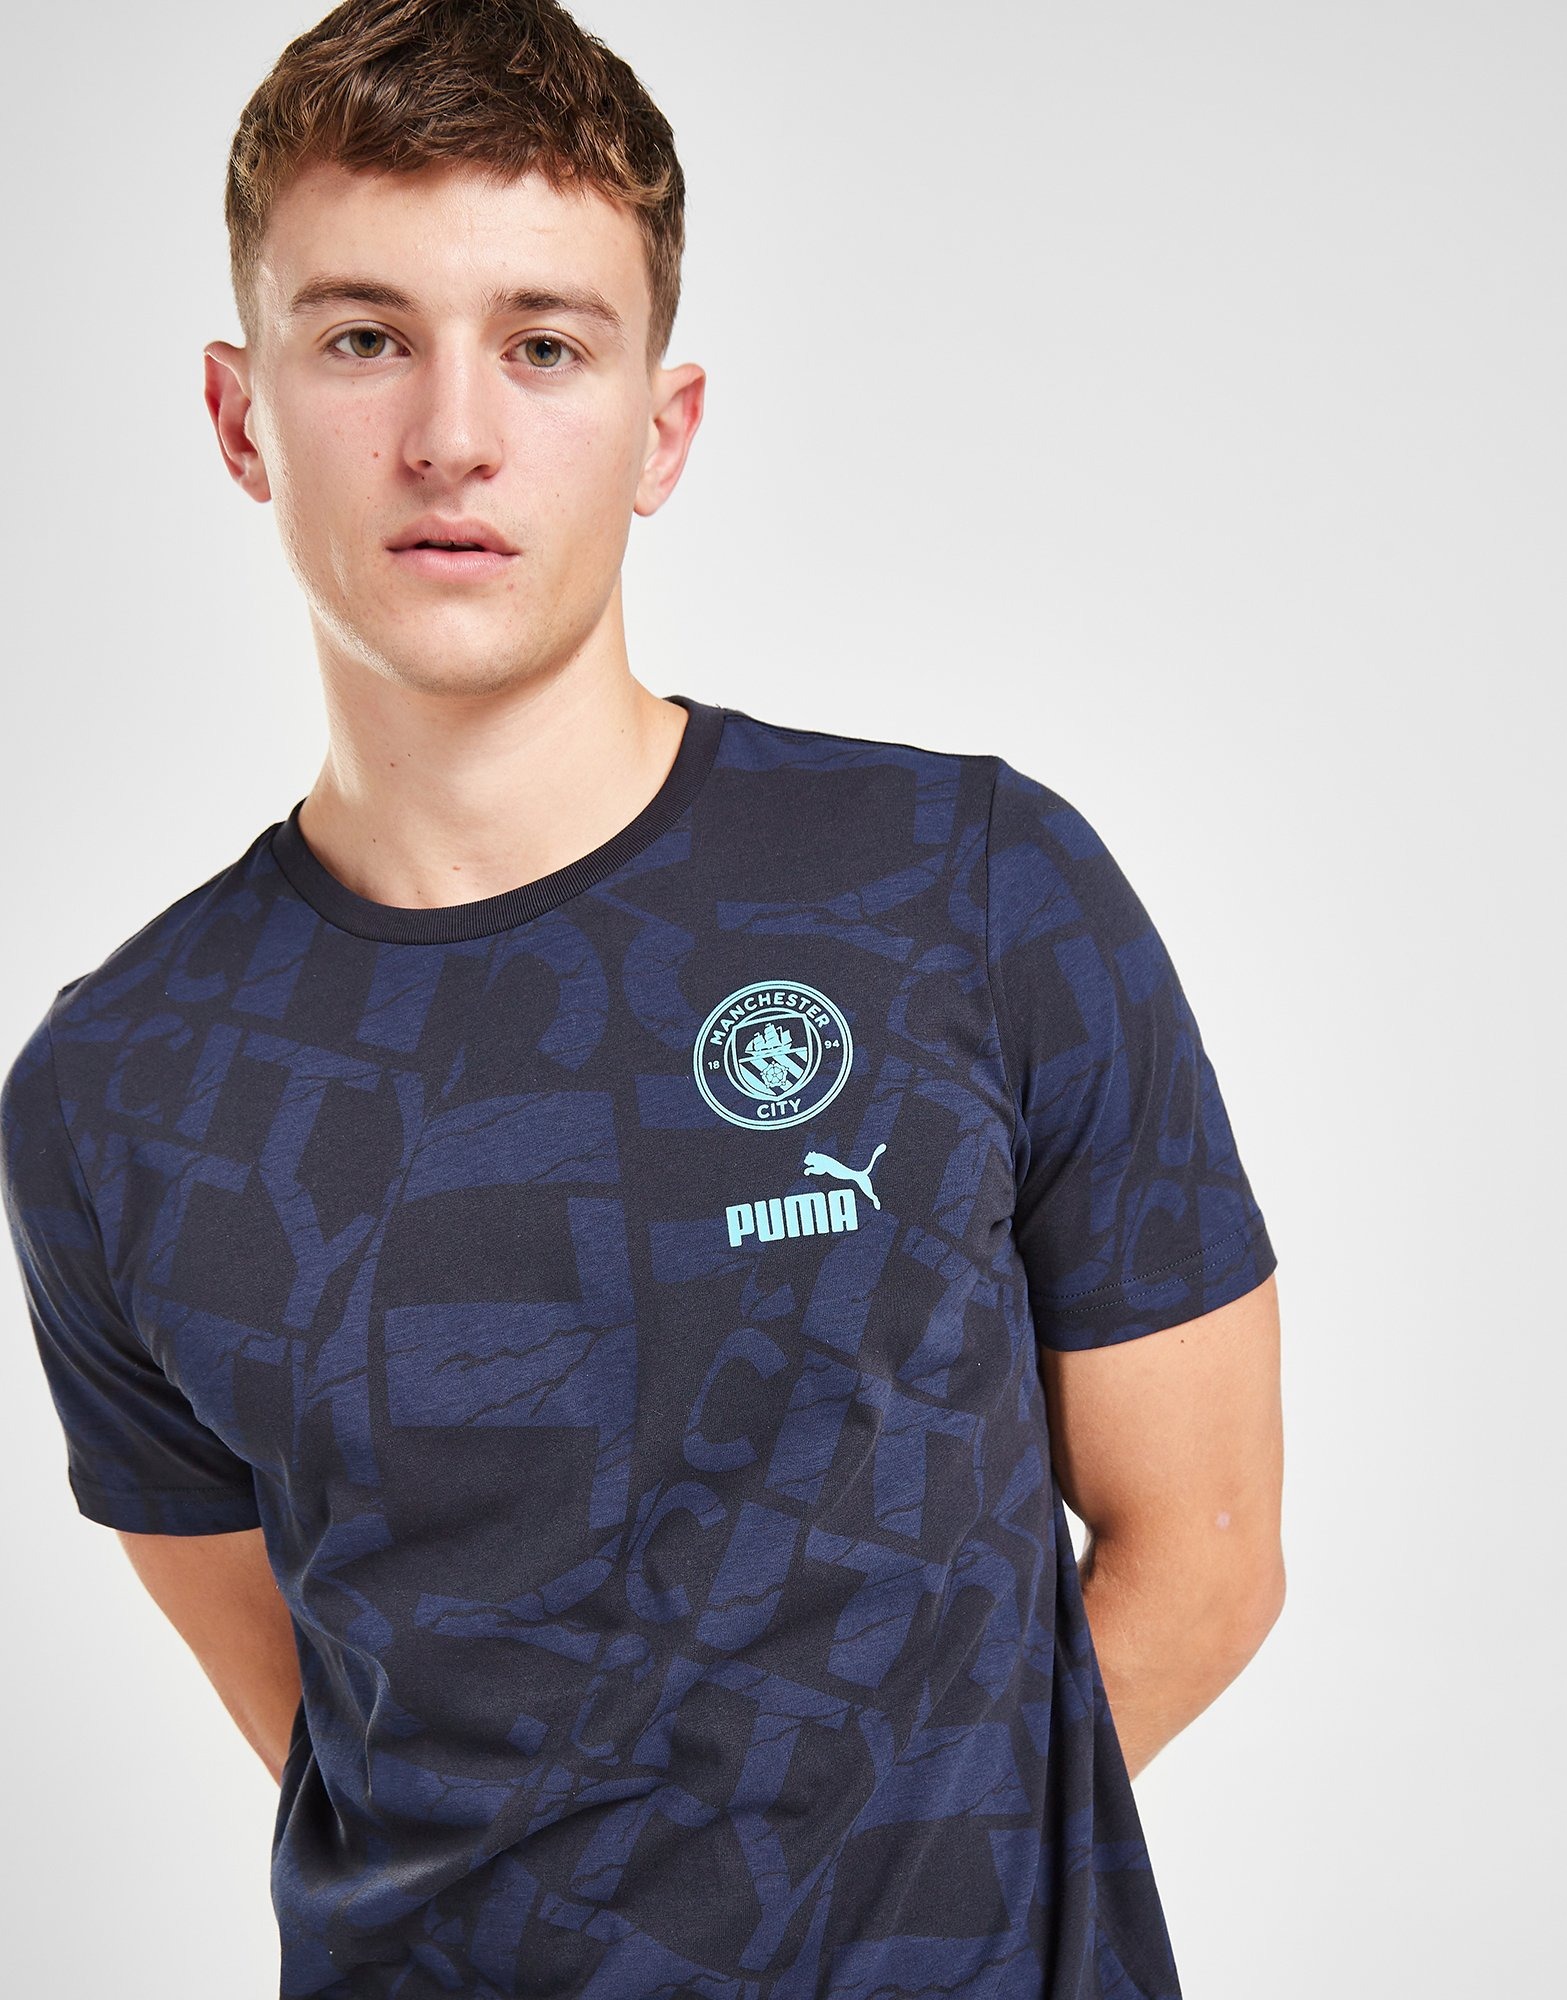 Blue Puma Manchester City FC All Over Print Shirt - JD Sports Ireland